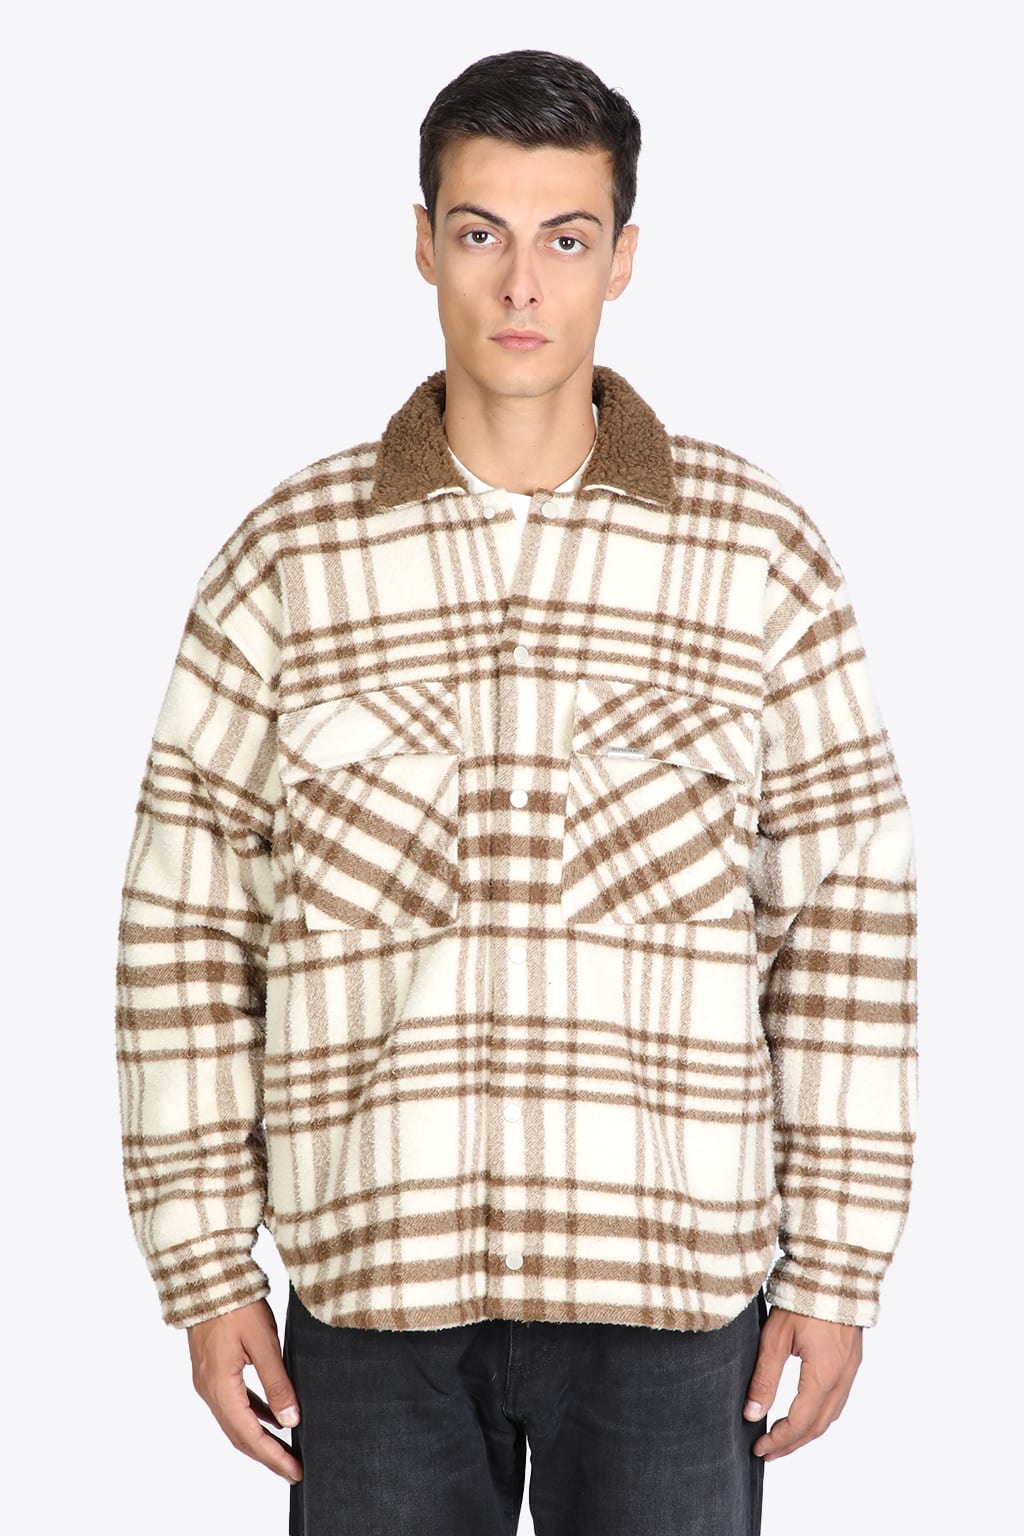 REPRESENT Sherpa T-shirt Bone/brown Check Wool Overshirt - Sherpa Shirt